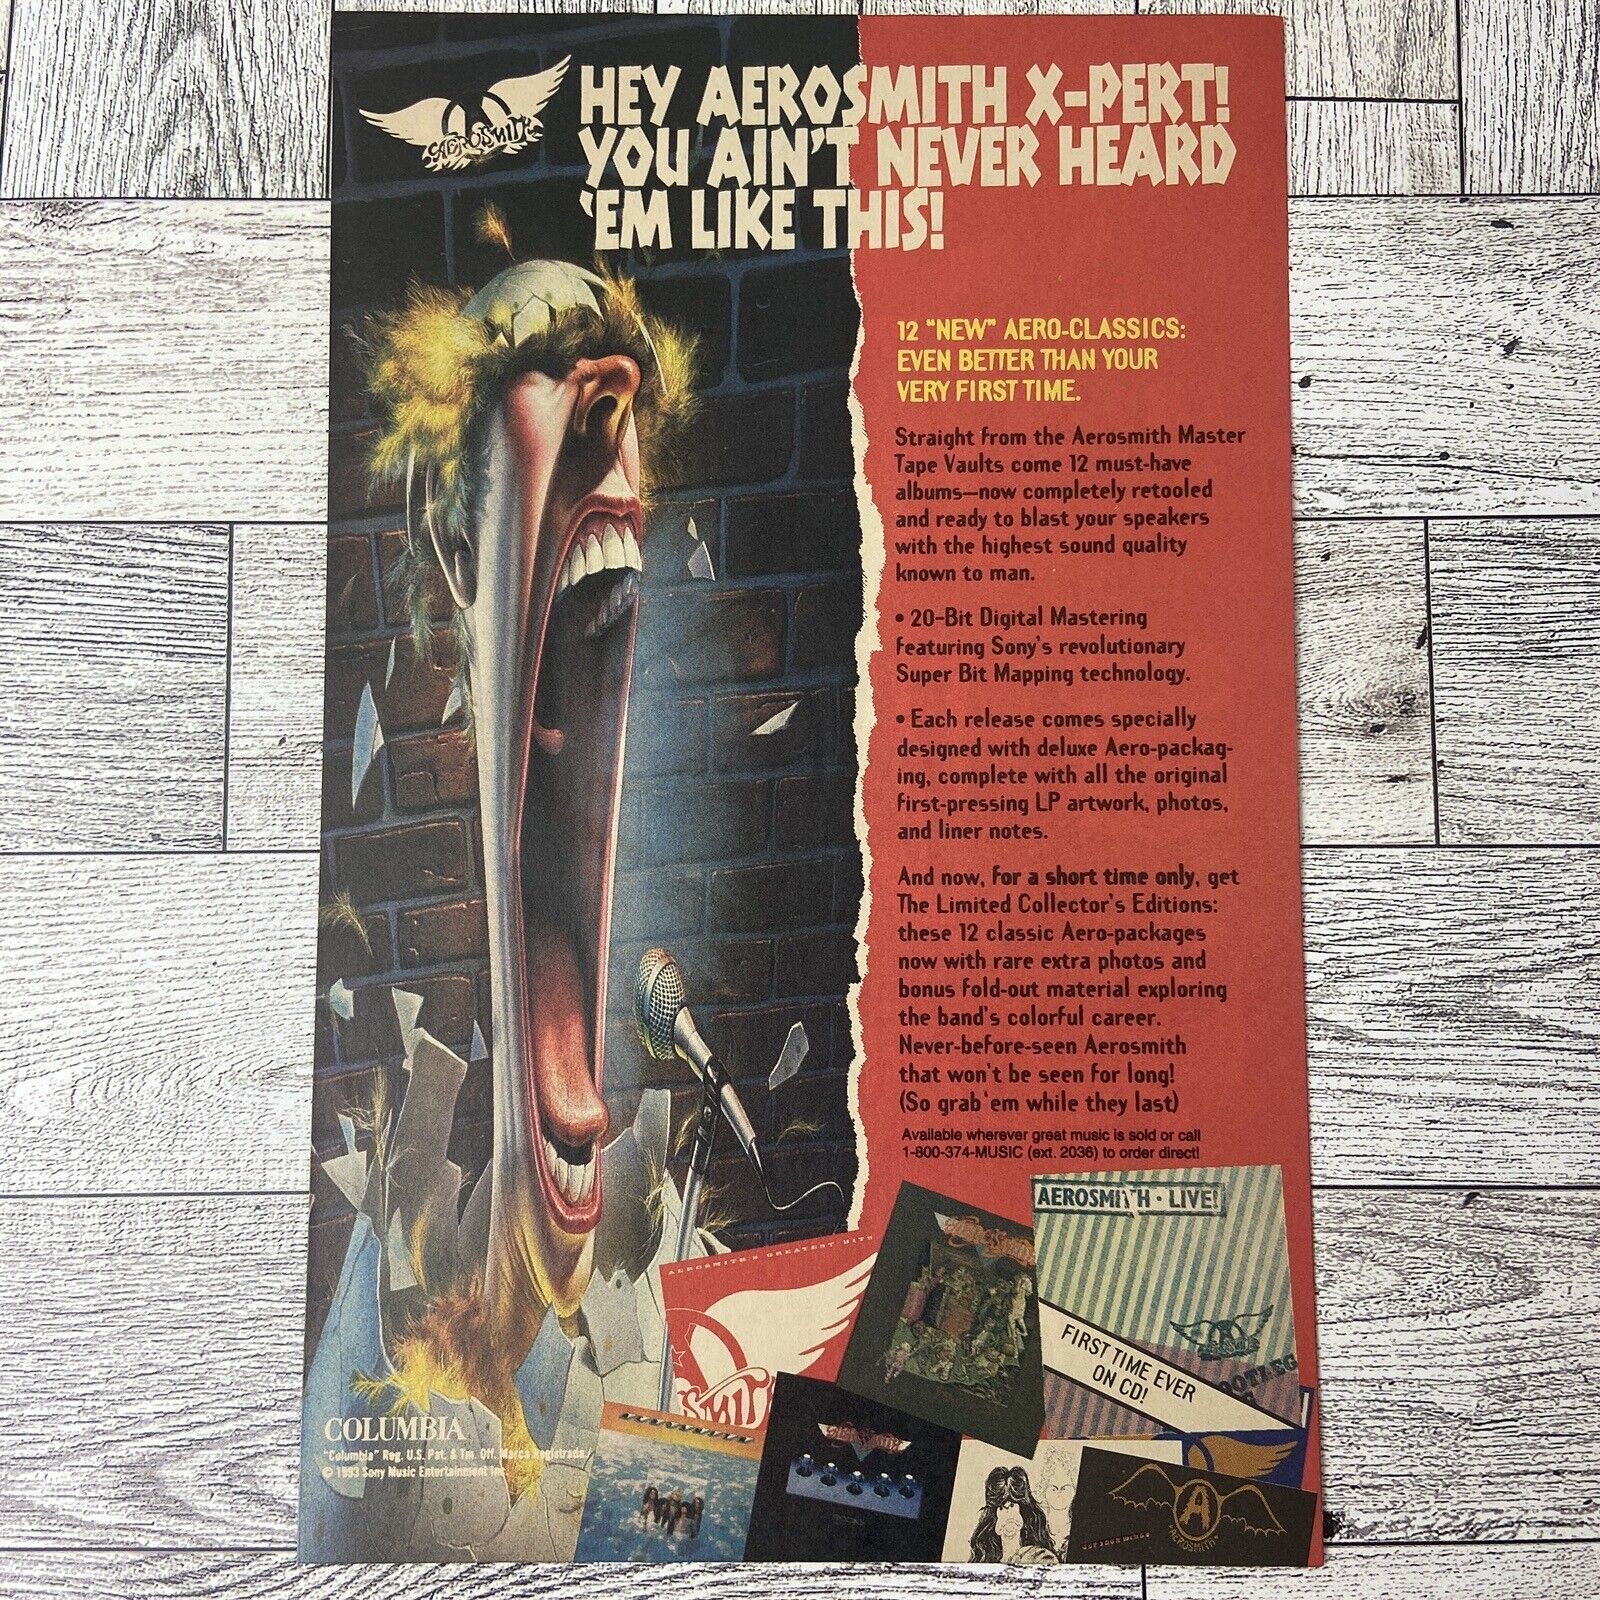 Print Ad Aerosmith Vintage Columbia Records Poster Authentic Promo Art 1993 Sony